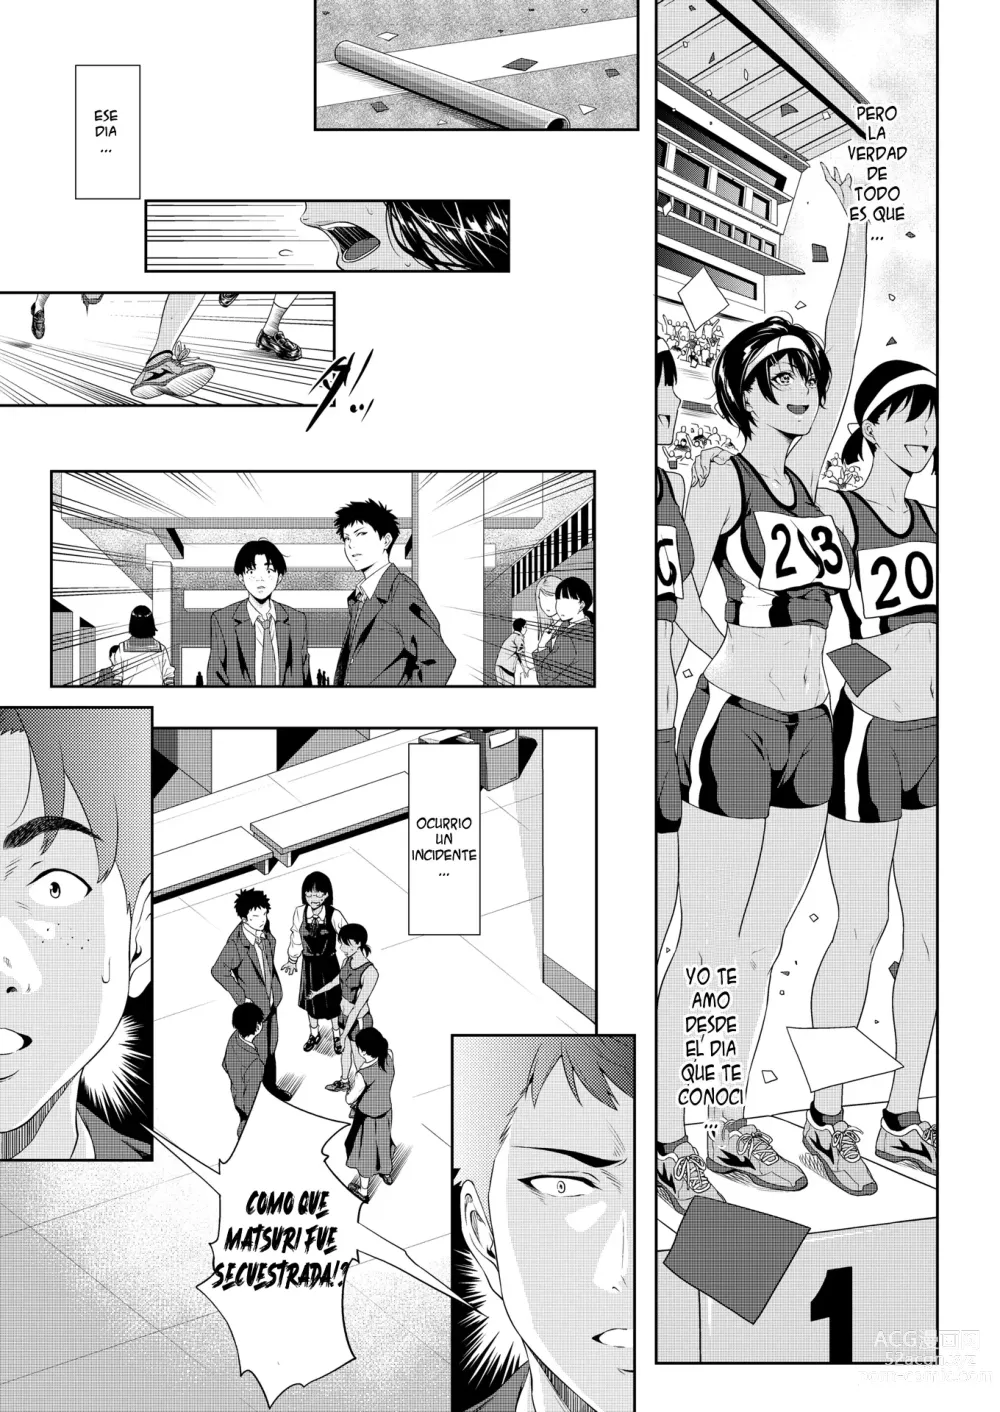 Page 7 of manga Bokutachi no Goal Line